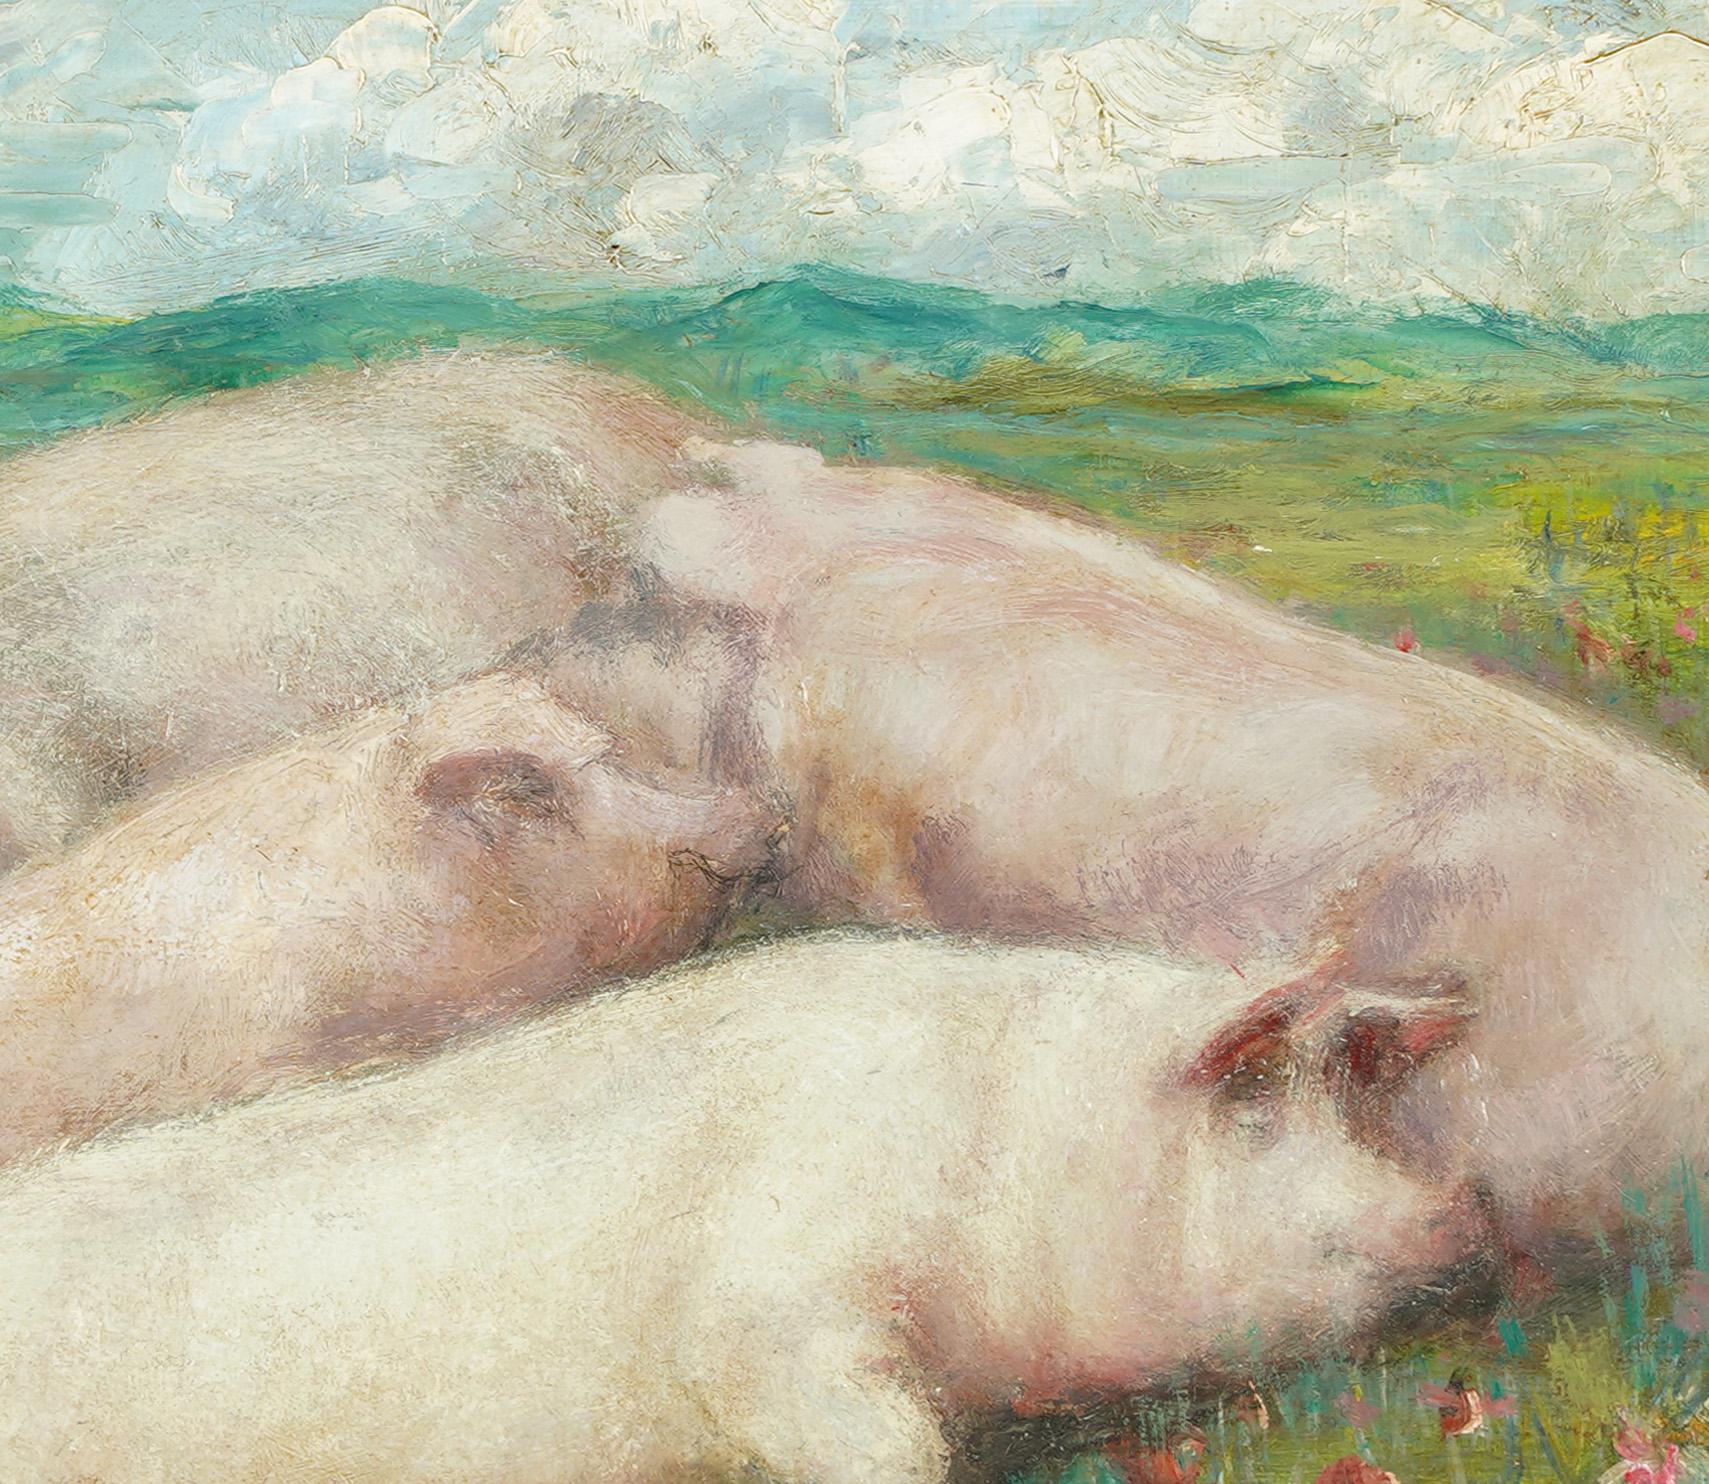 Antique American modernist pig oil painting.  Oil on board.  Signed.  Framed.  Image size, 11L x 9H.